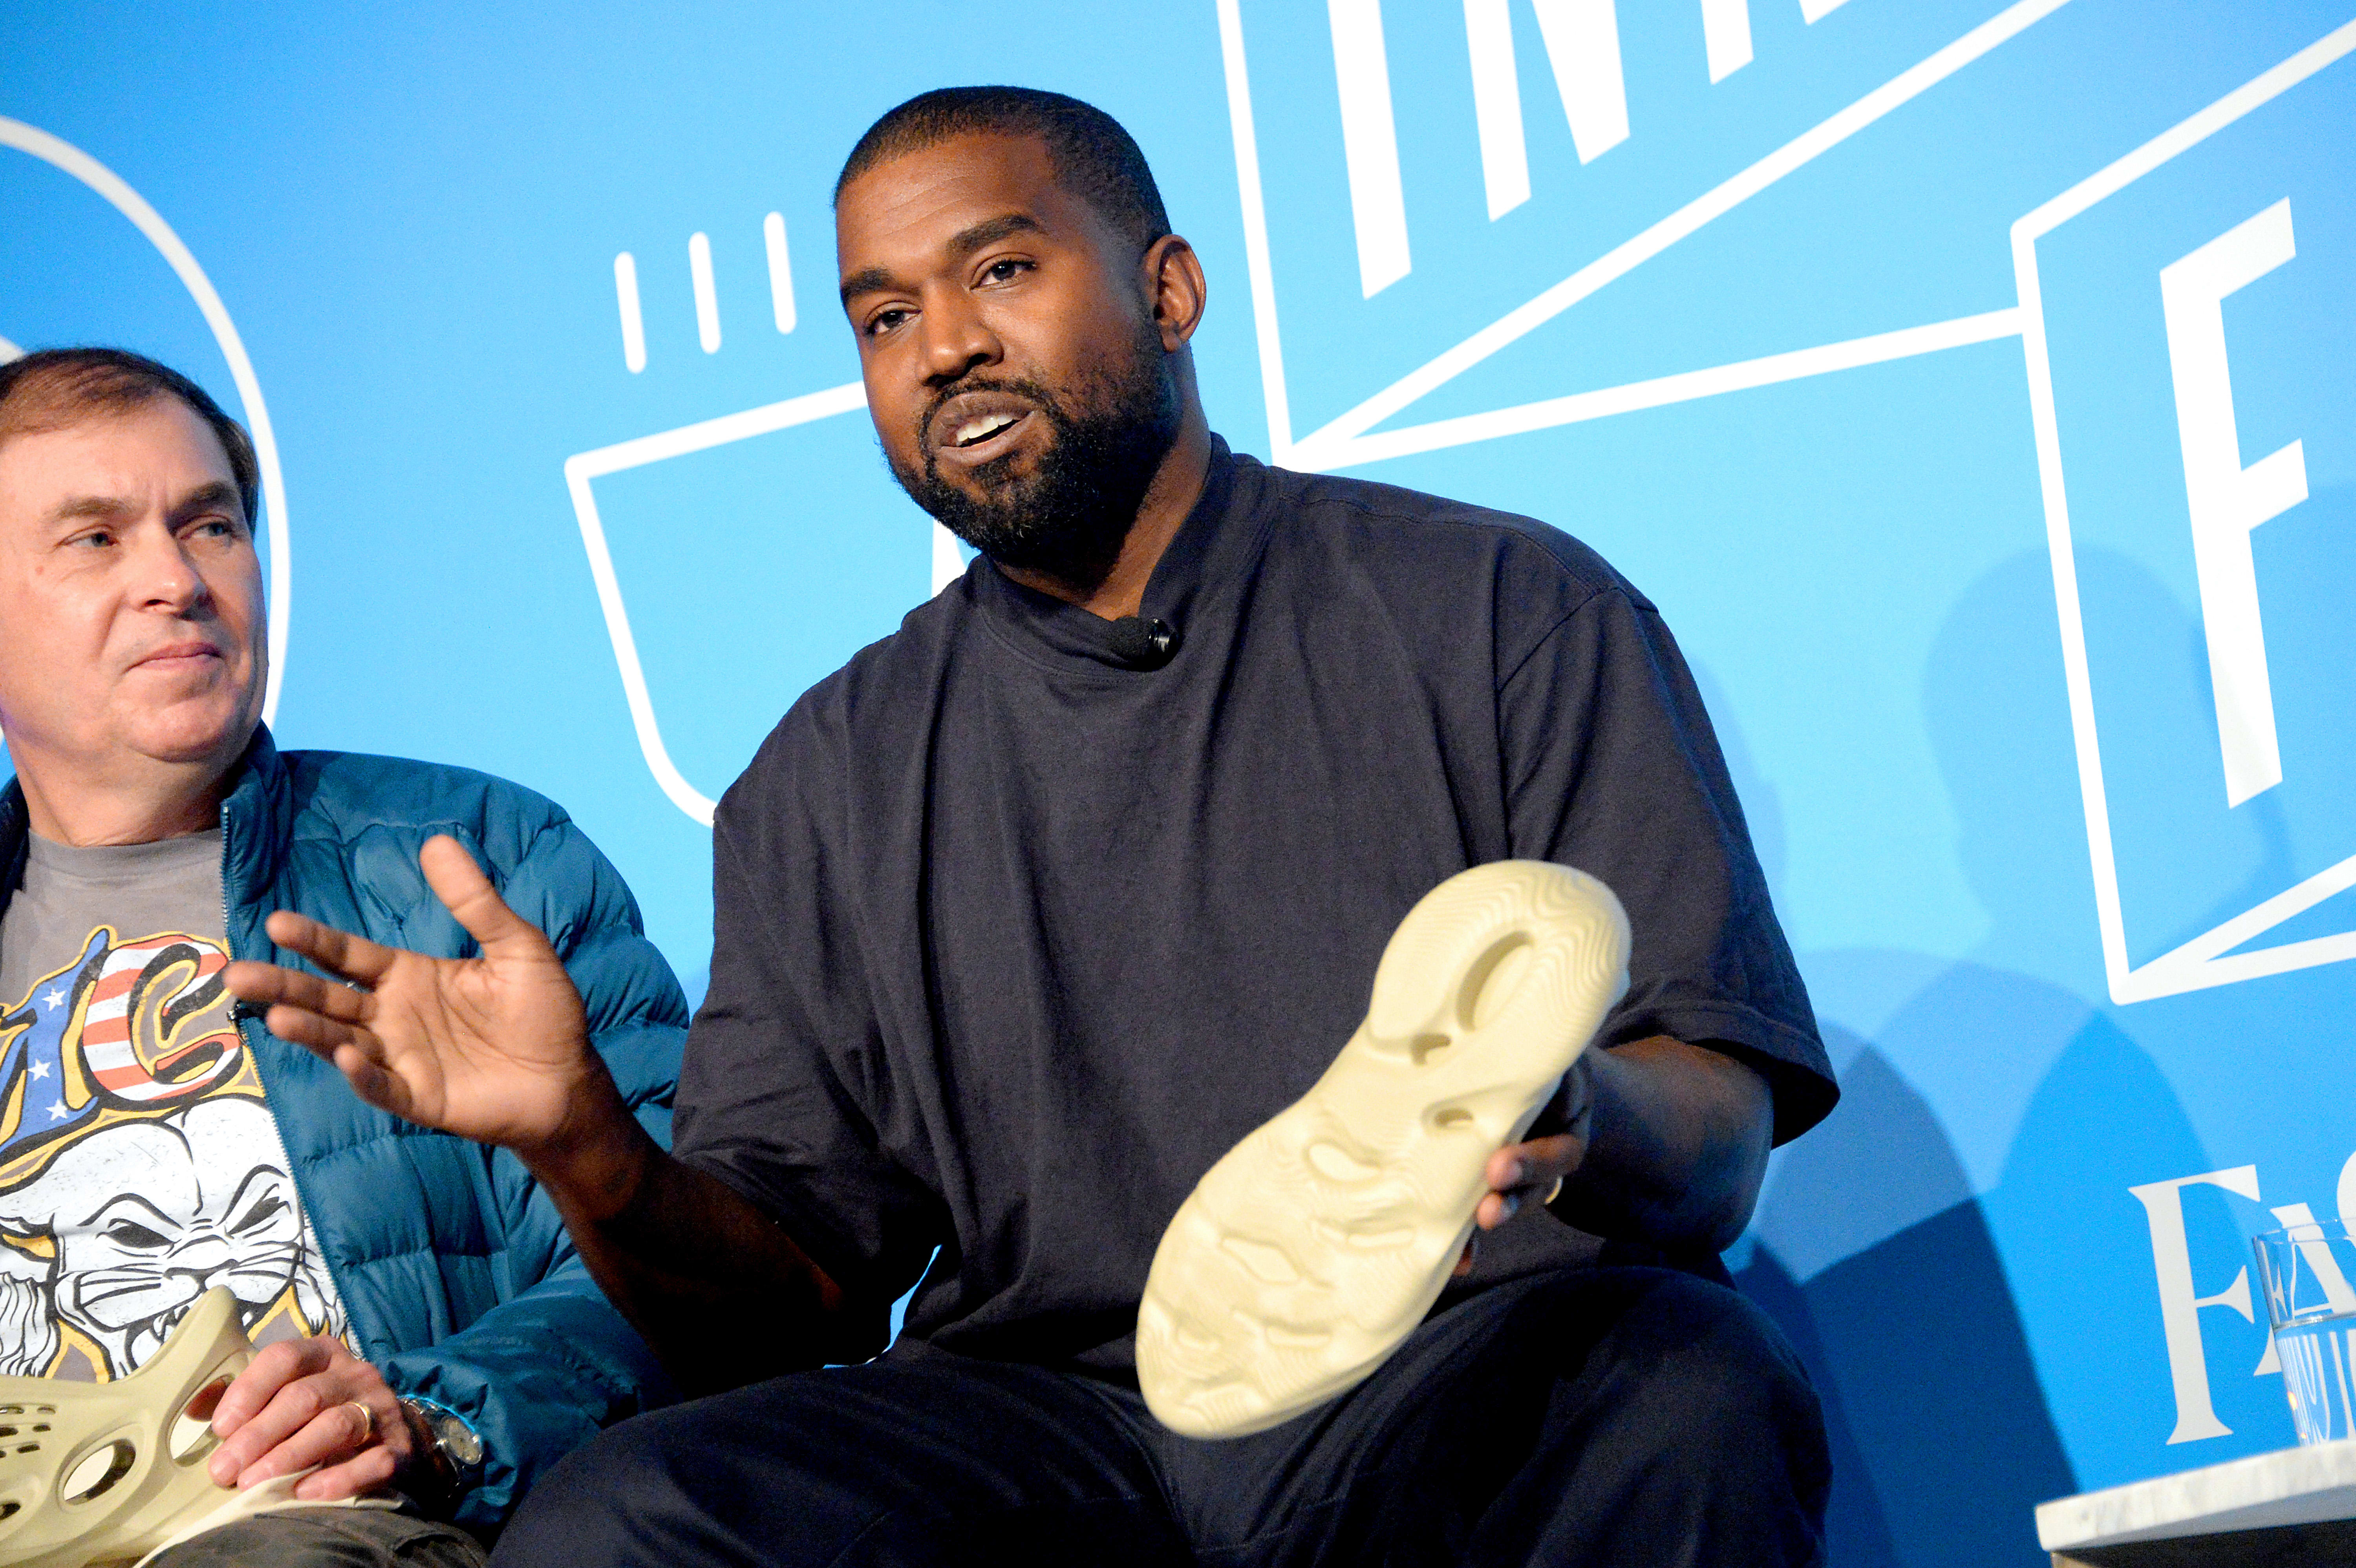 Kanye West Yeezy Foam Runner Crocs Algae Sole